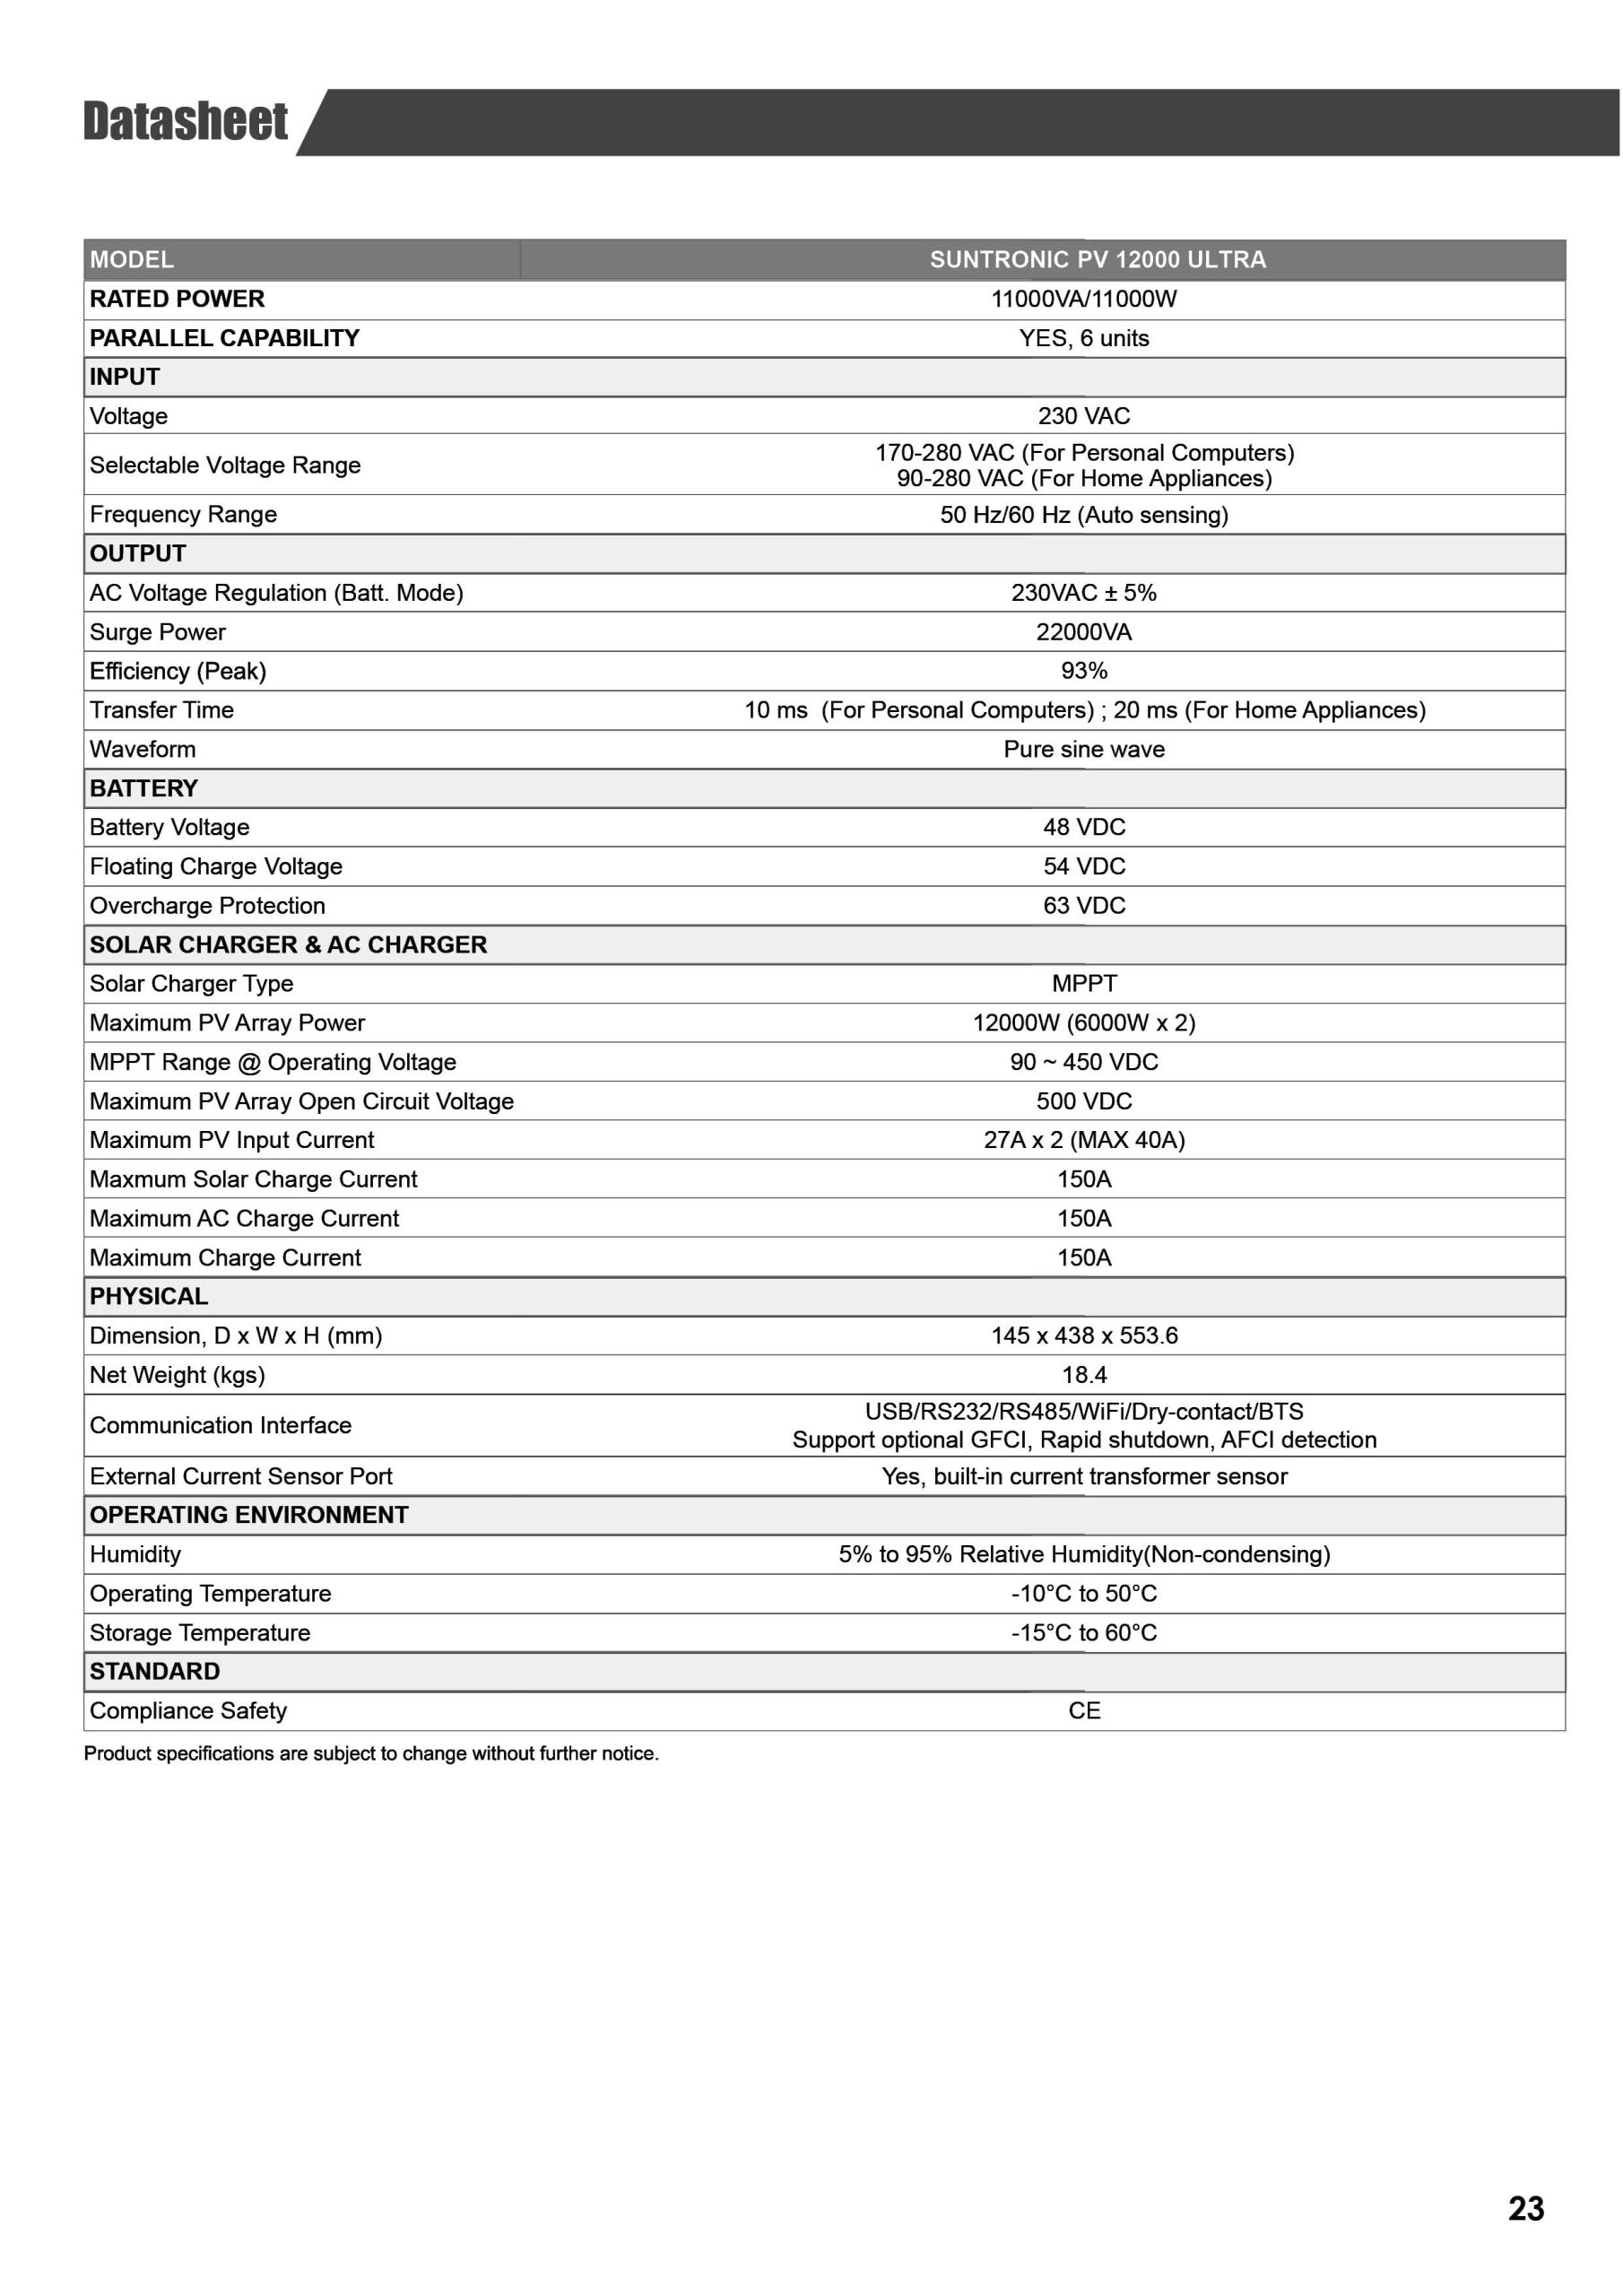 Suntronic PV12000 Ultra Datasheet